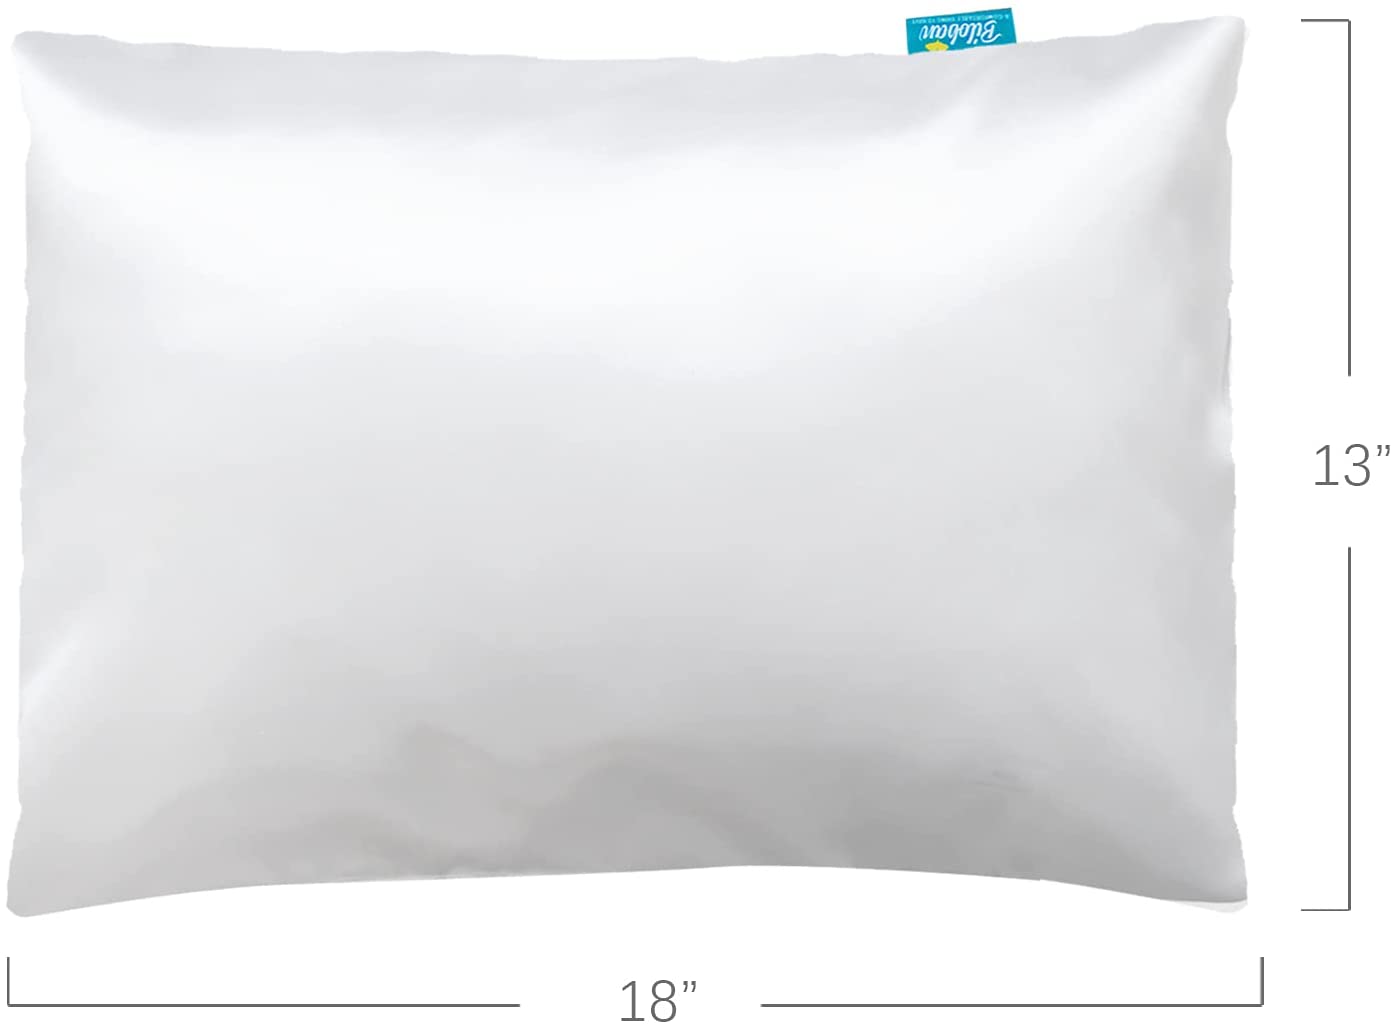 Toddler Pillowcase - 2 pack, 13" x 18", Silky Soft Satin, Envelope Style